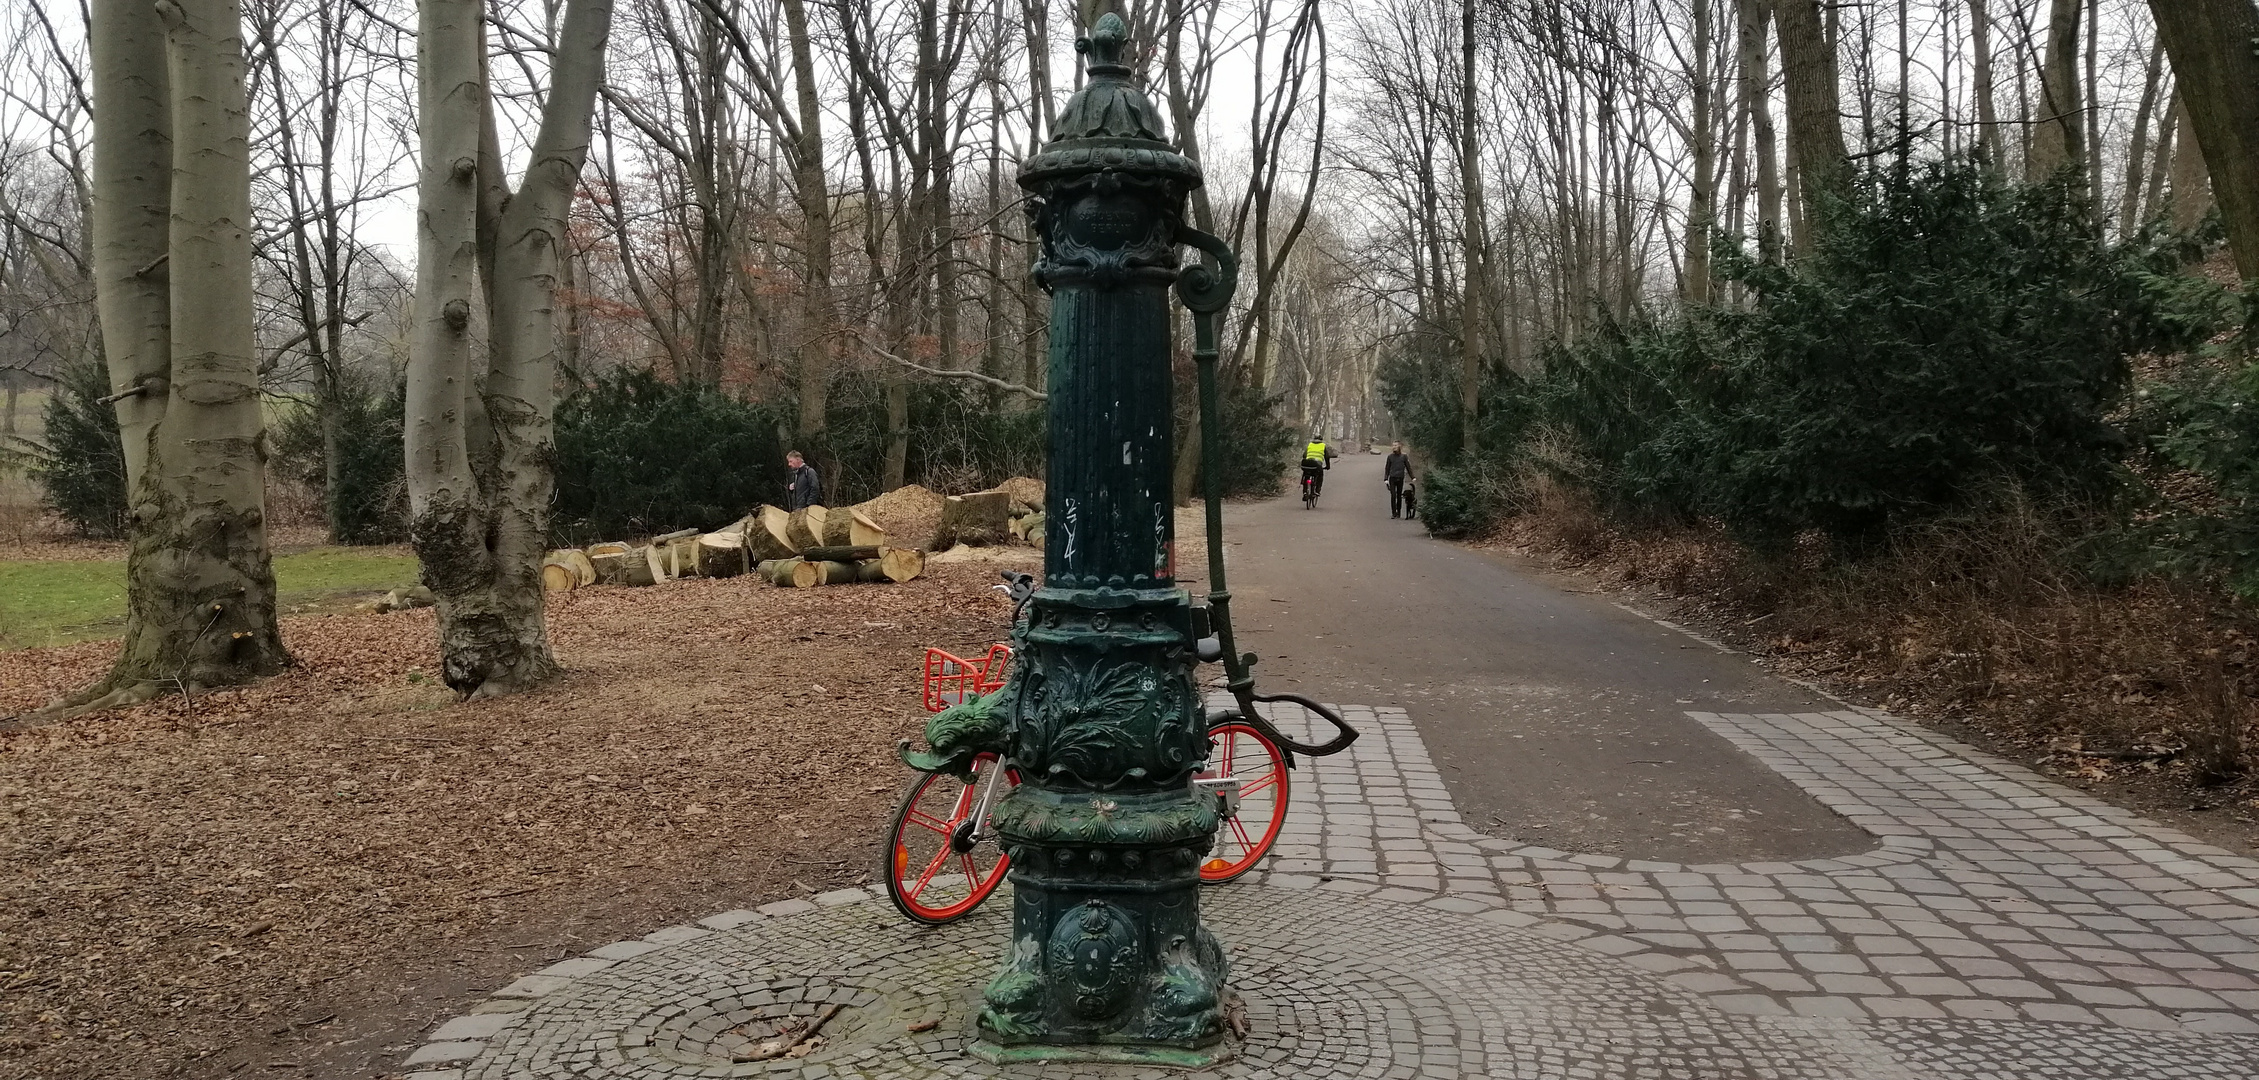 Pumpe im Volkspark Humboldhain in Berlin